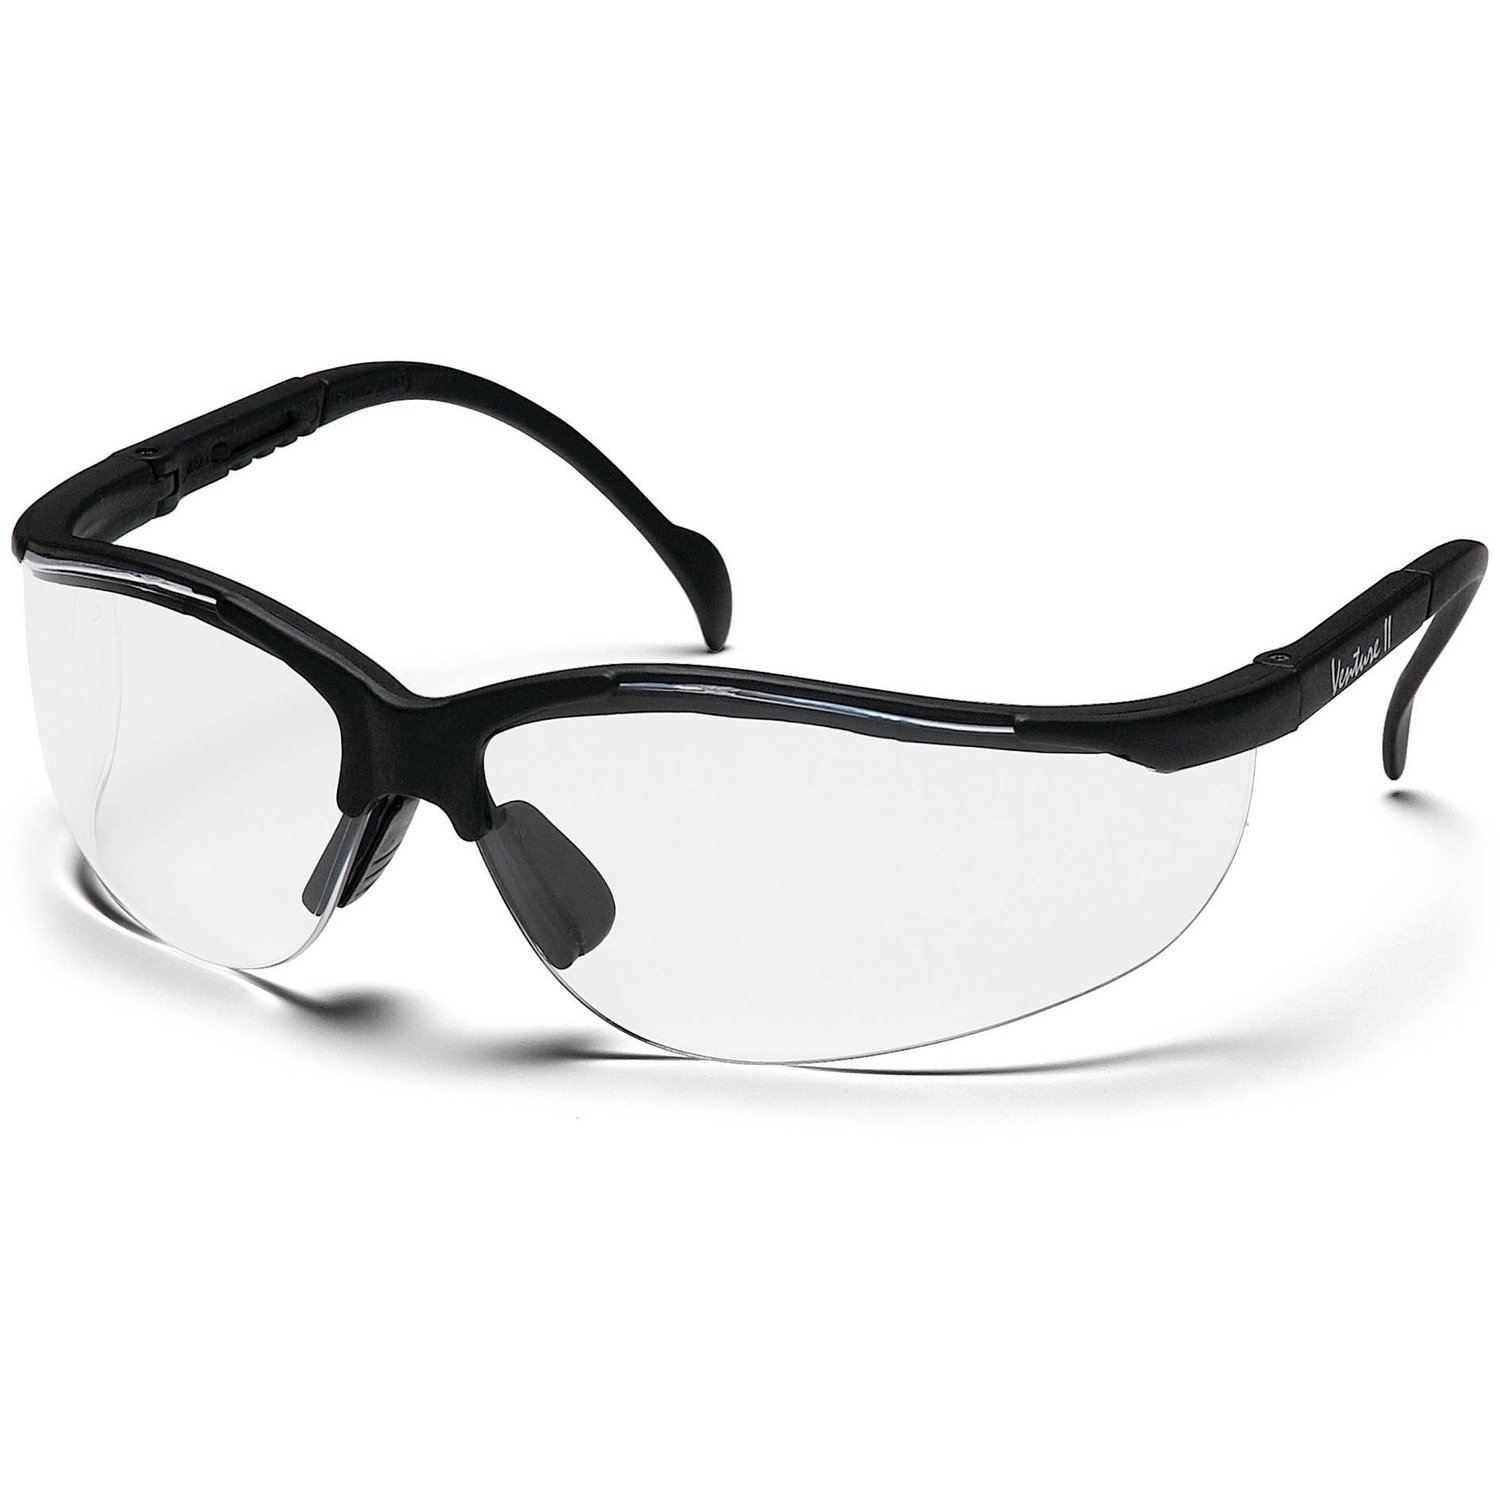 Safety Glasses Black Frame Venture Ii Sold By The Dozen